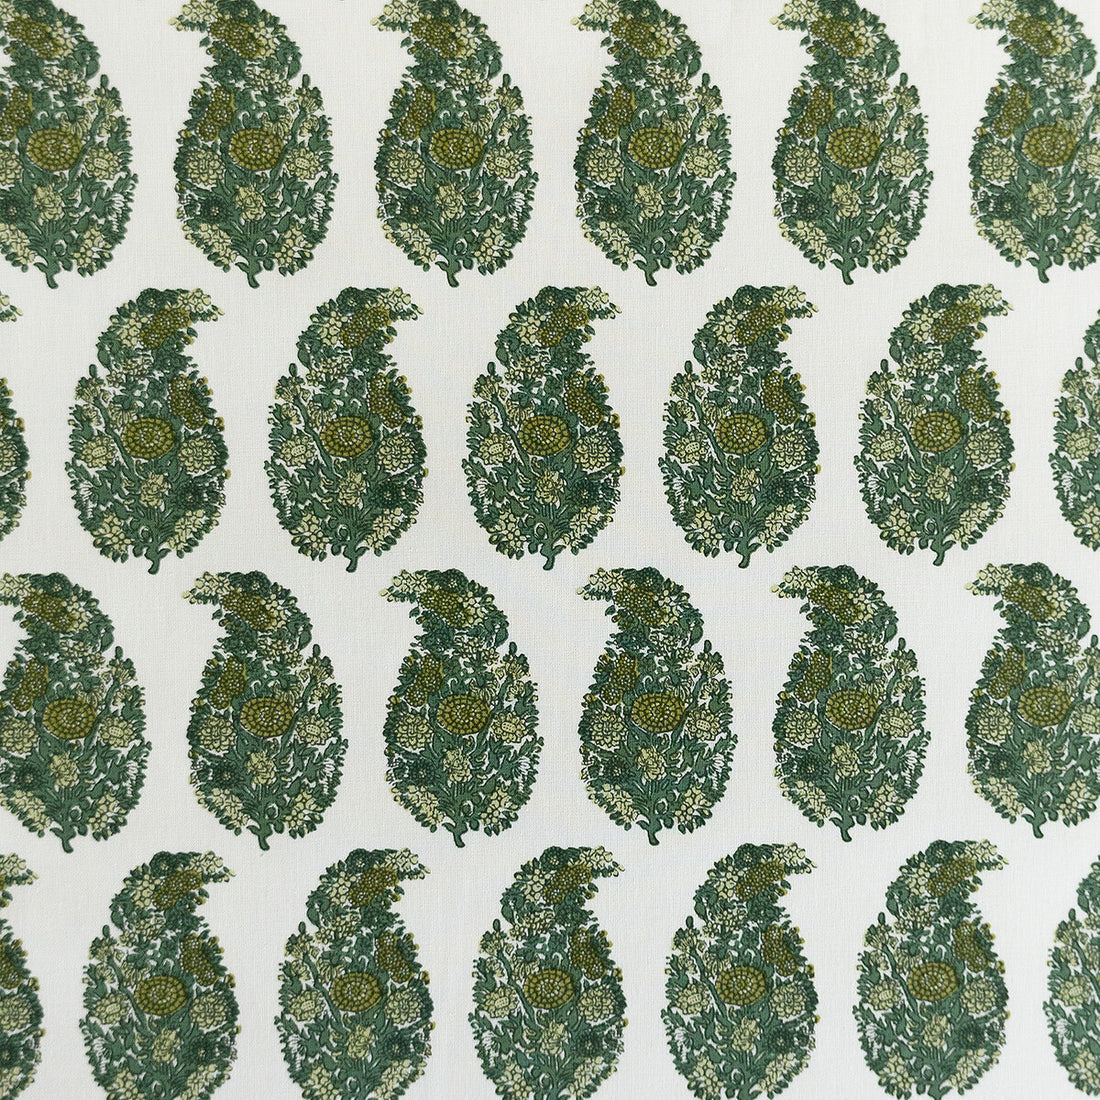 Tarsila fabric in verde color - pattern LCT1029.001.0 - by Gaston y Daniela in the Lorenzo Castillo V collection